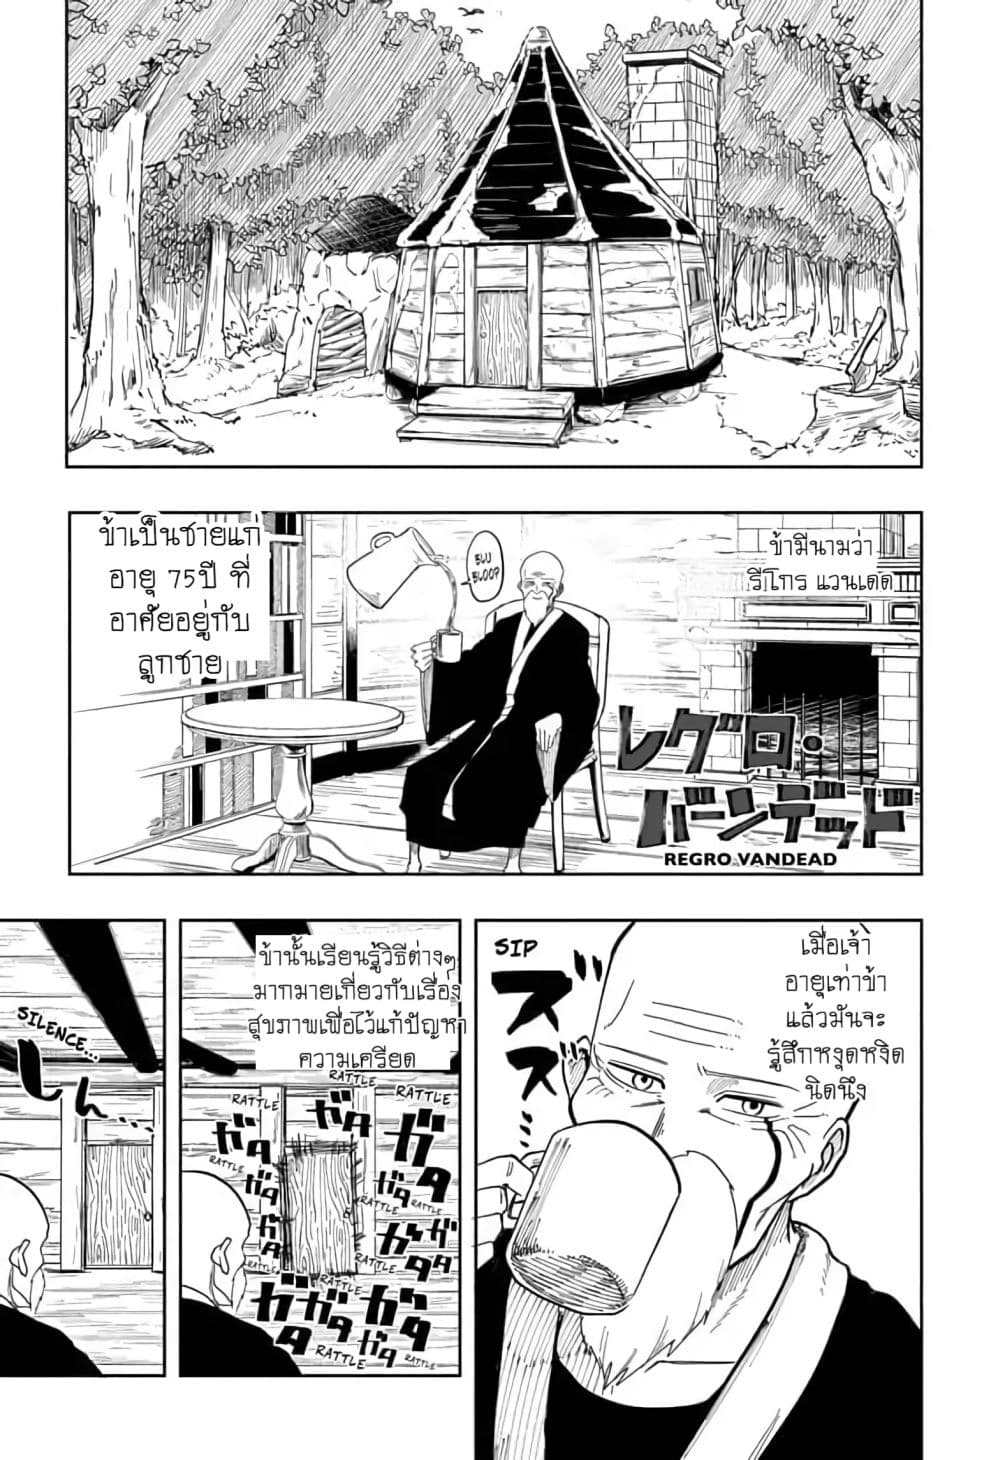 manga168.com